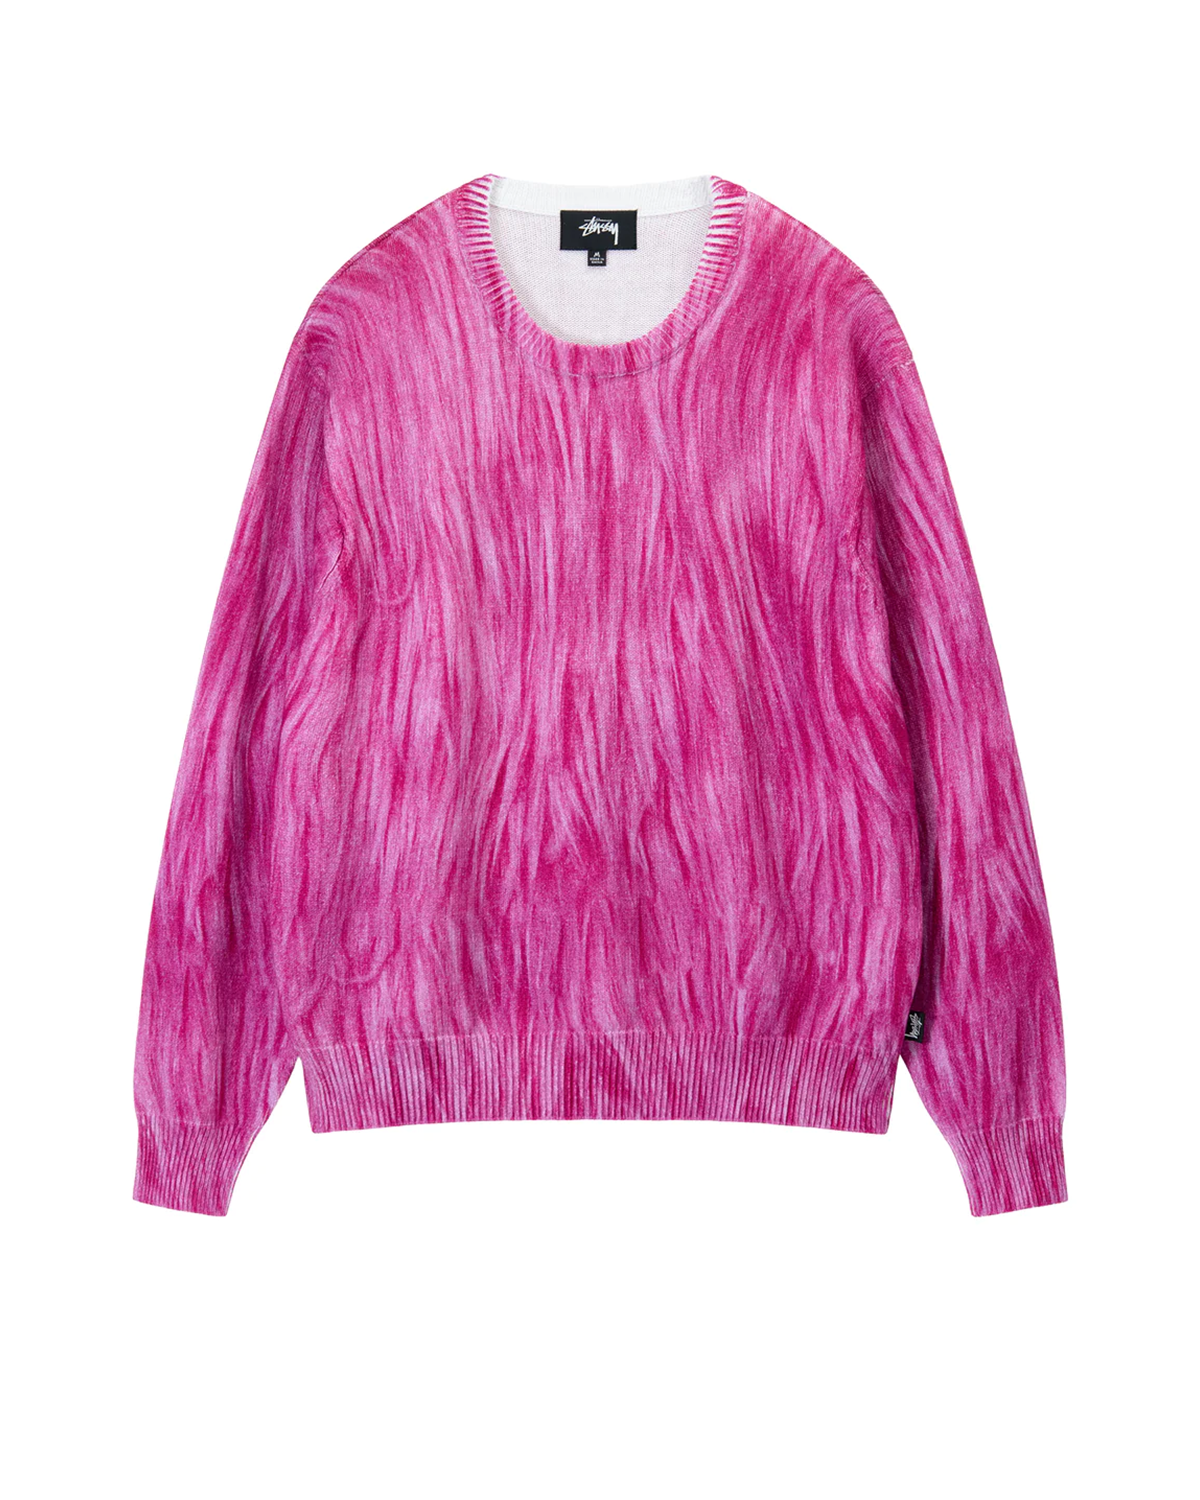 Printed Fur Sweater Pink